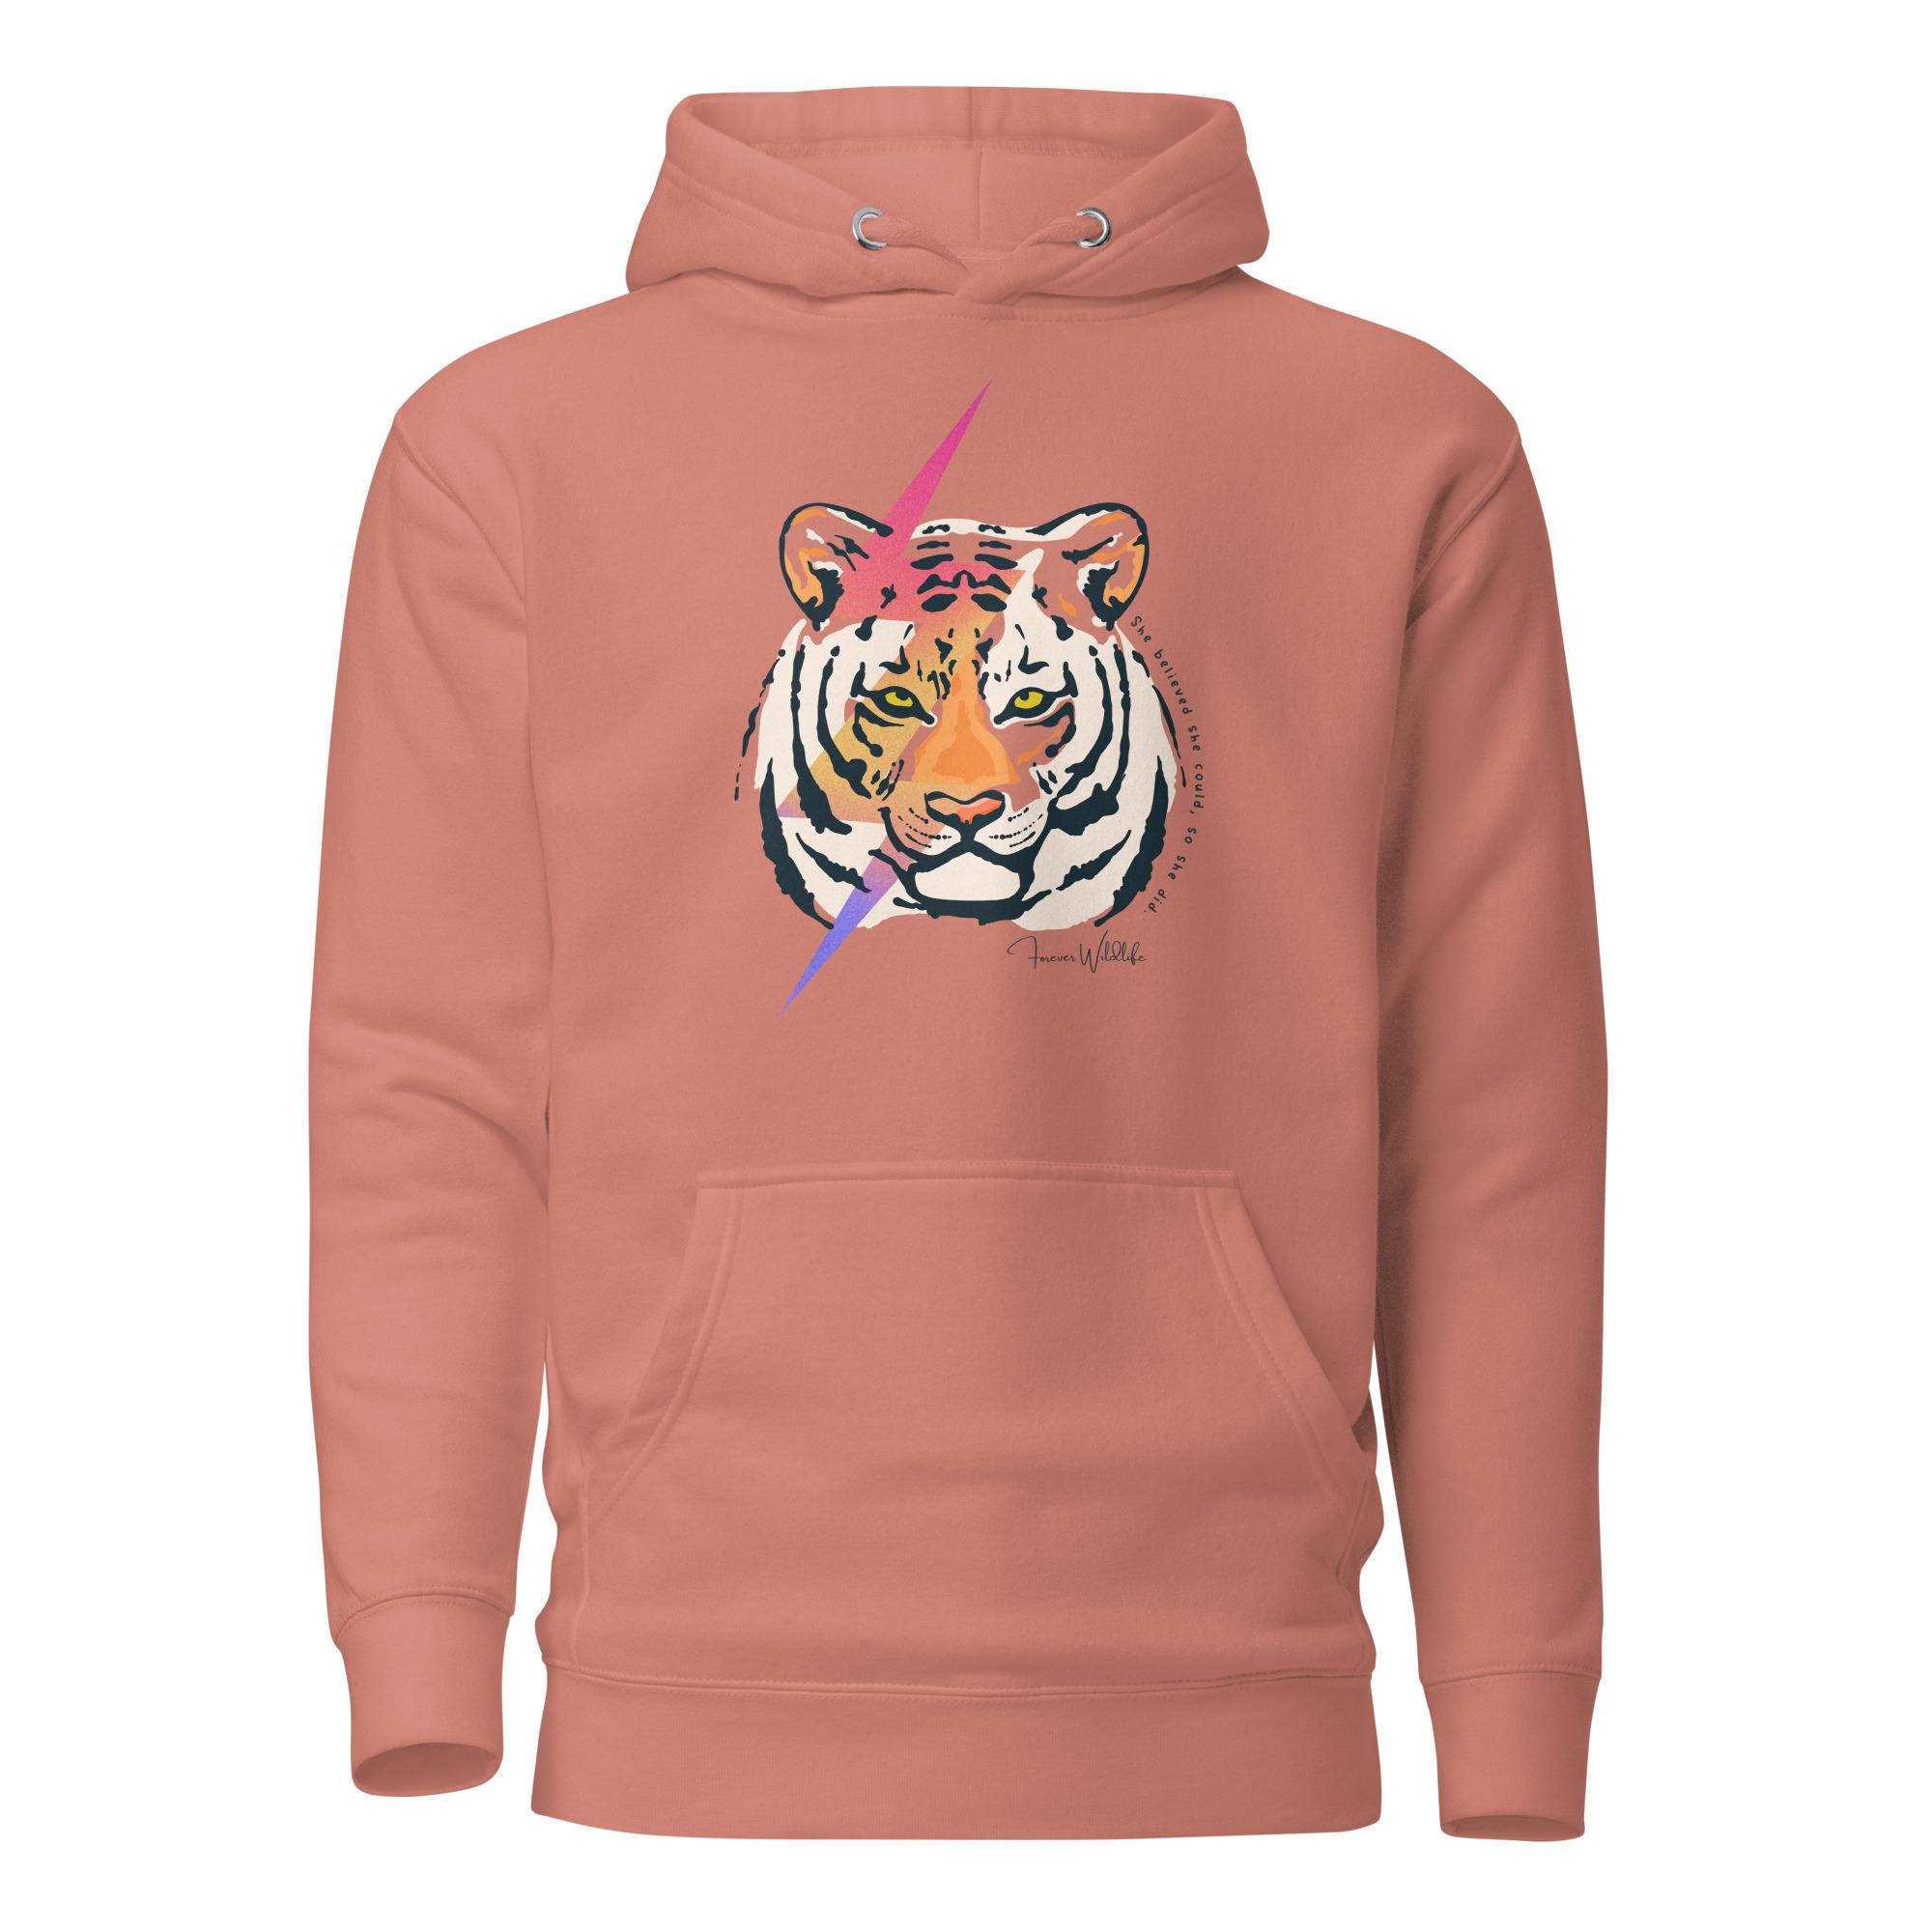 Tiger Hoodie in Dusty Rose – Premium Wildlife Animal Inspirational Hoodie Design, part of Wildlife Hoodies & Clothing from Forever Wildlife